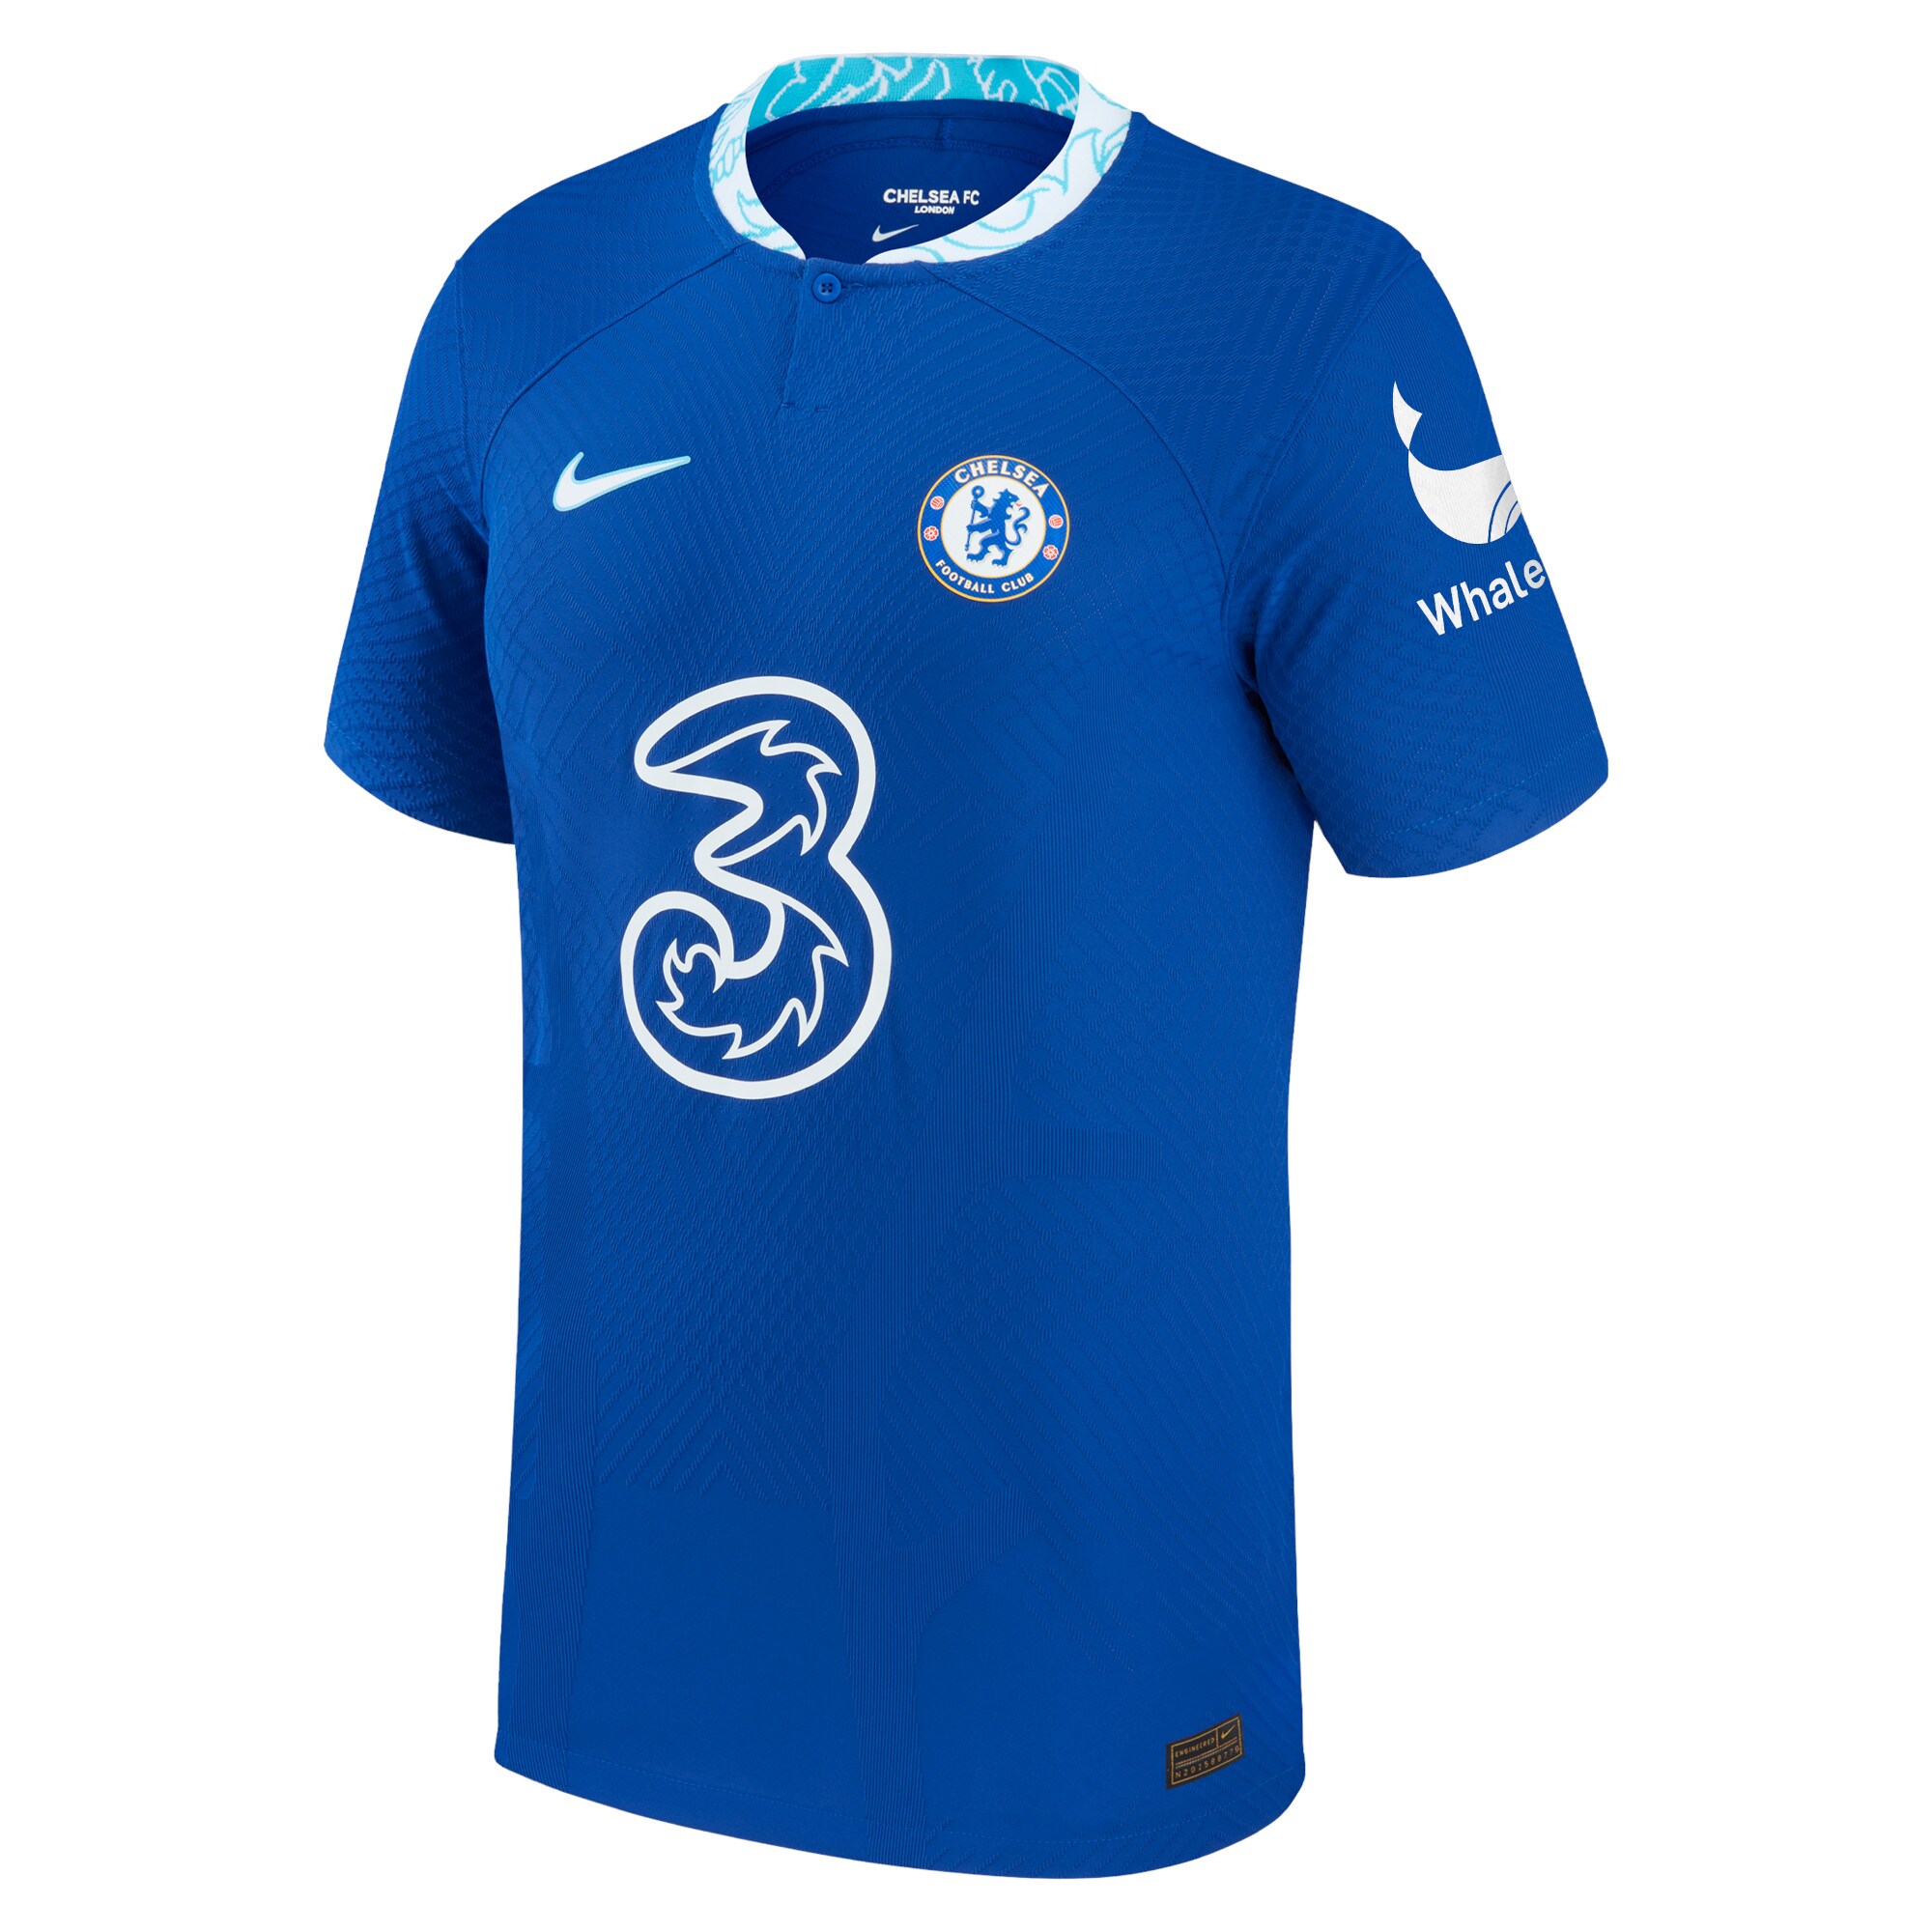 Chelsea Cup Home Vapor Match Shirt 2022-23 with Leupolz 8 printing